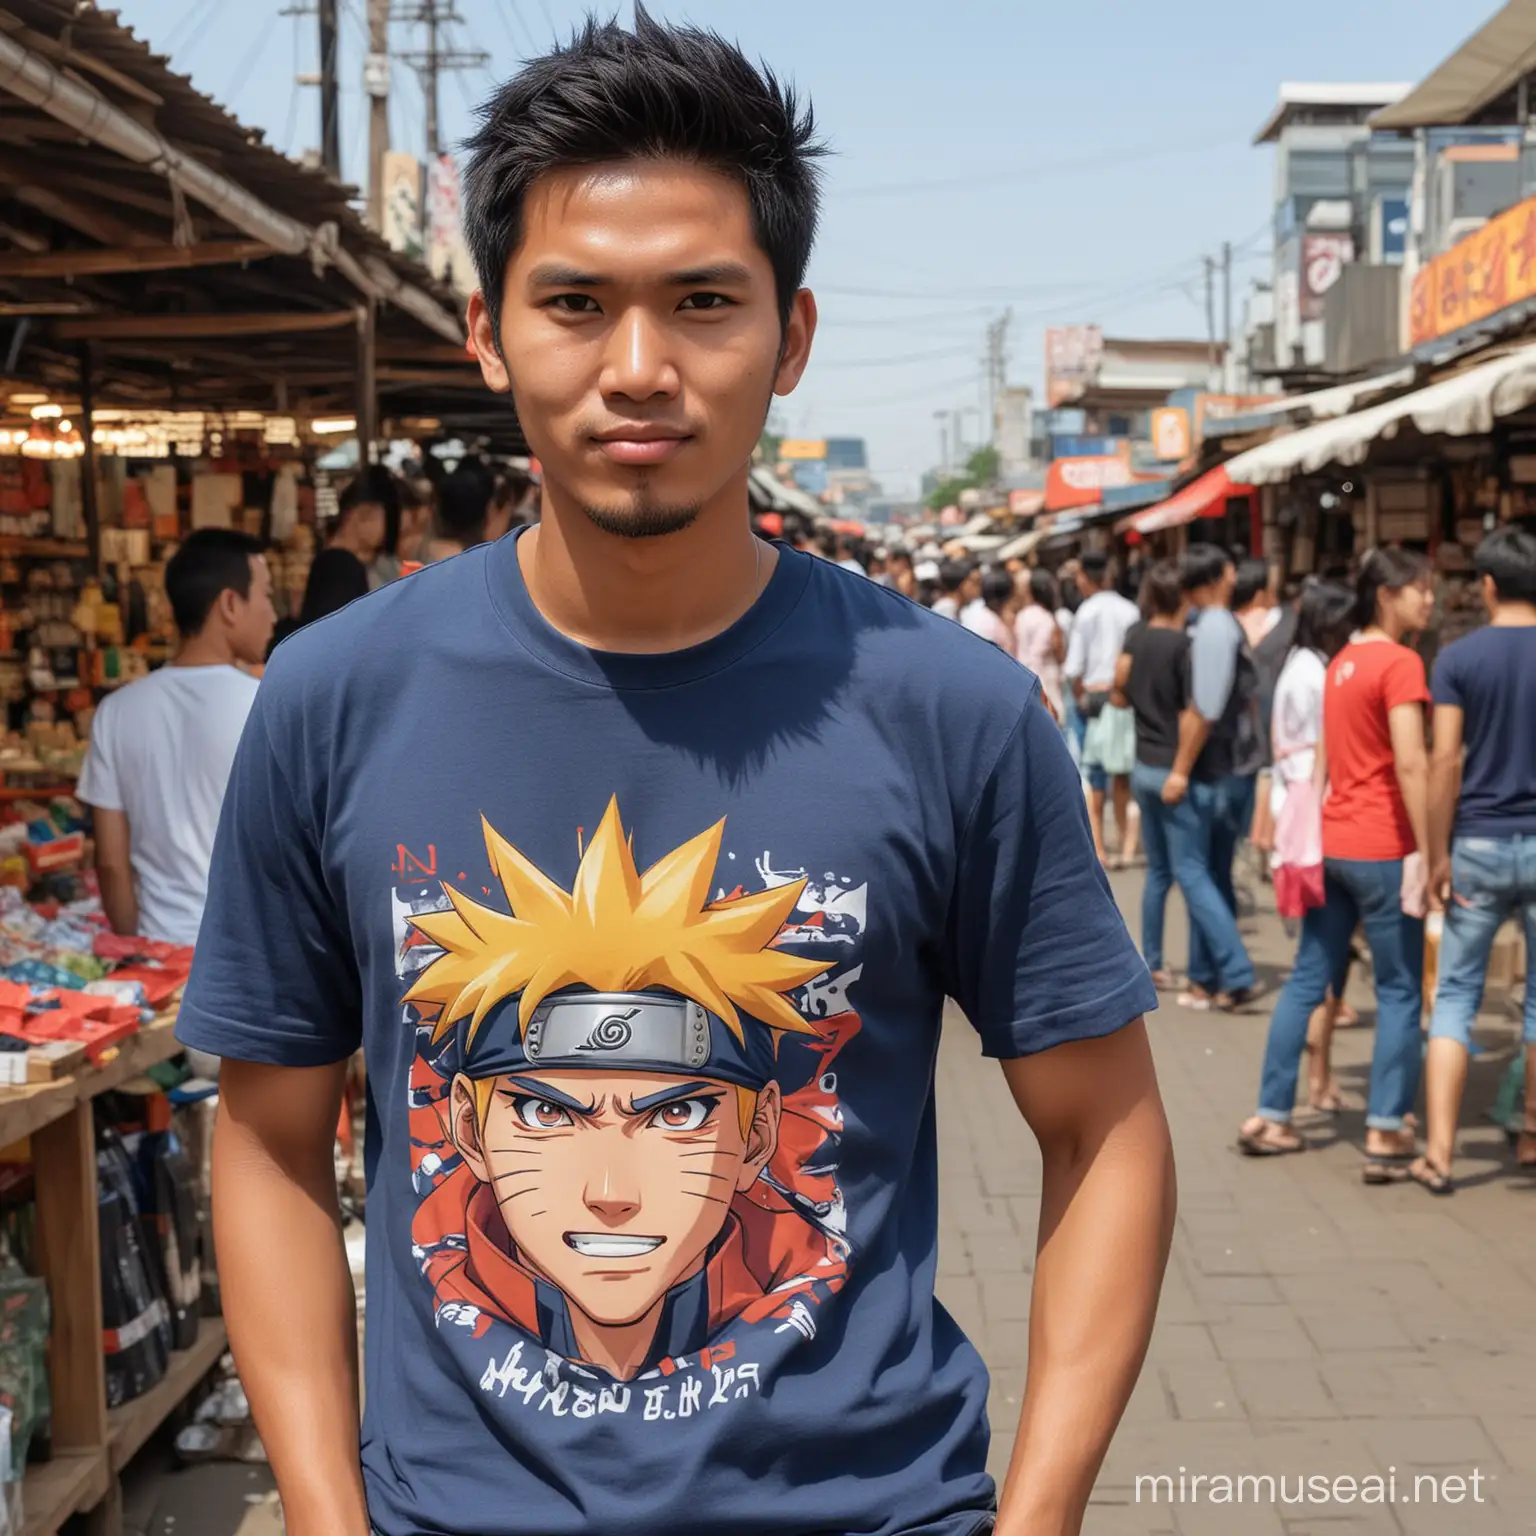 Friendly Indonesian Man in Naruto TShirt at Traditional Market